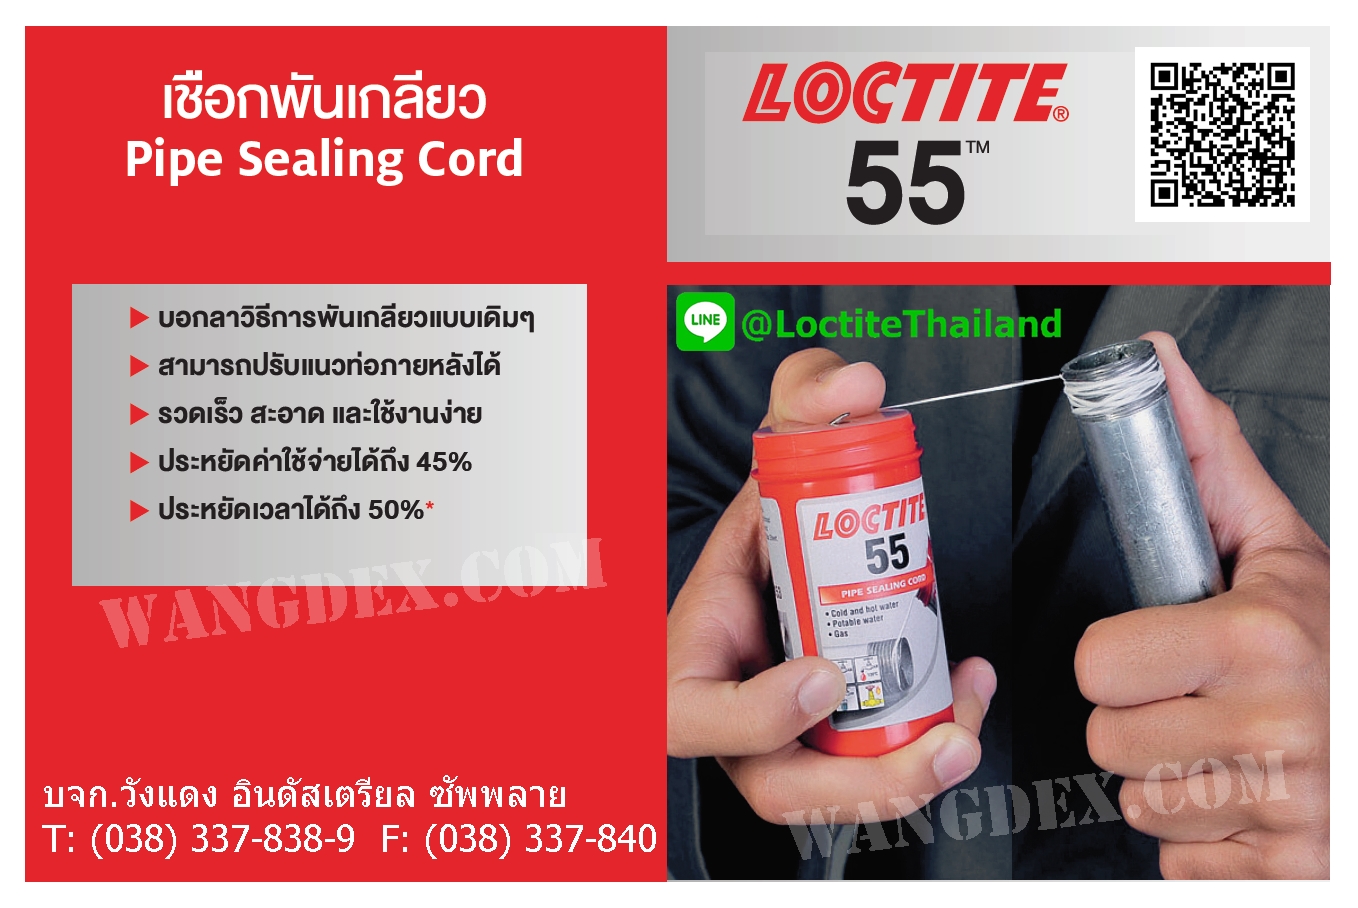 LOCTITE 55 Thread Sealing Cord